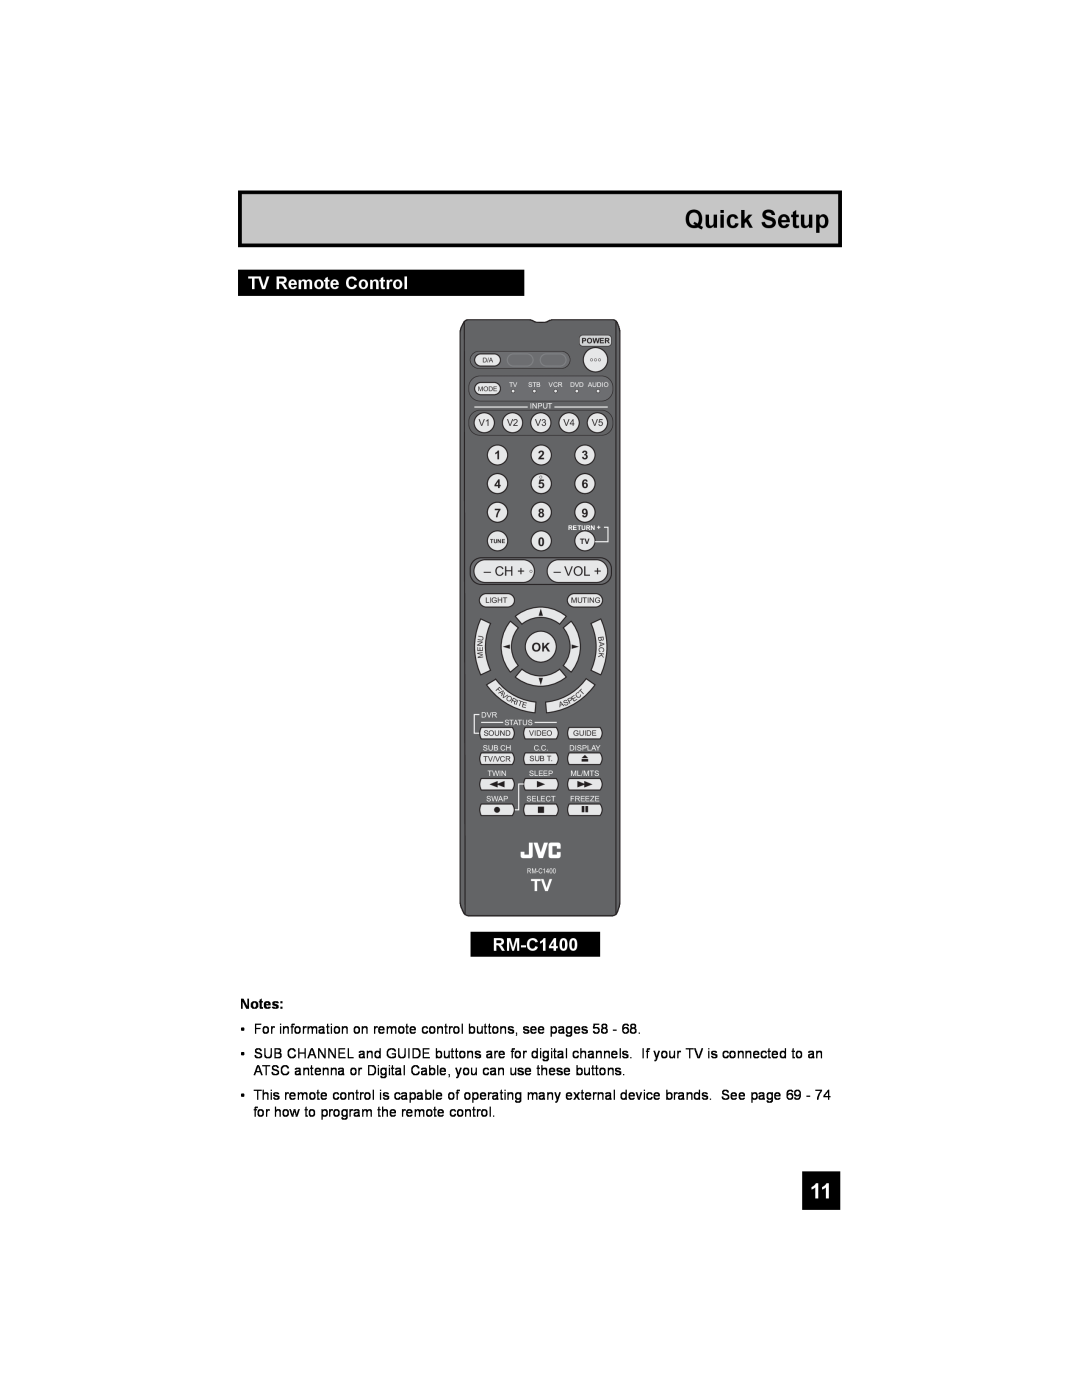 JVC LT-37X898, LT-42X898 manual TV Remote Control, TV RM-C1400, Quick Setup 